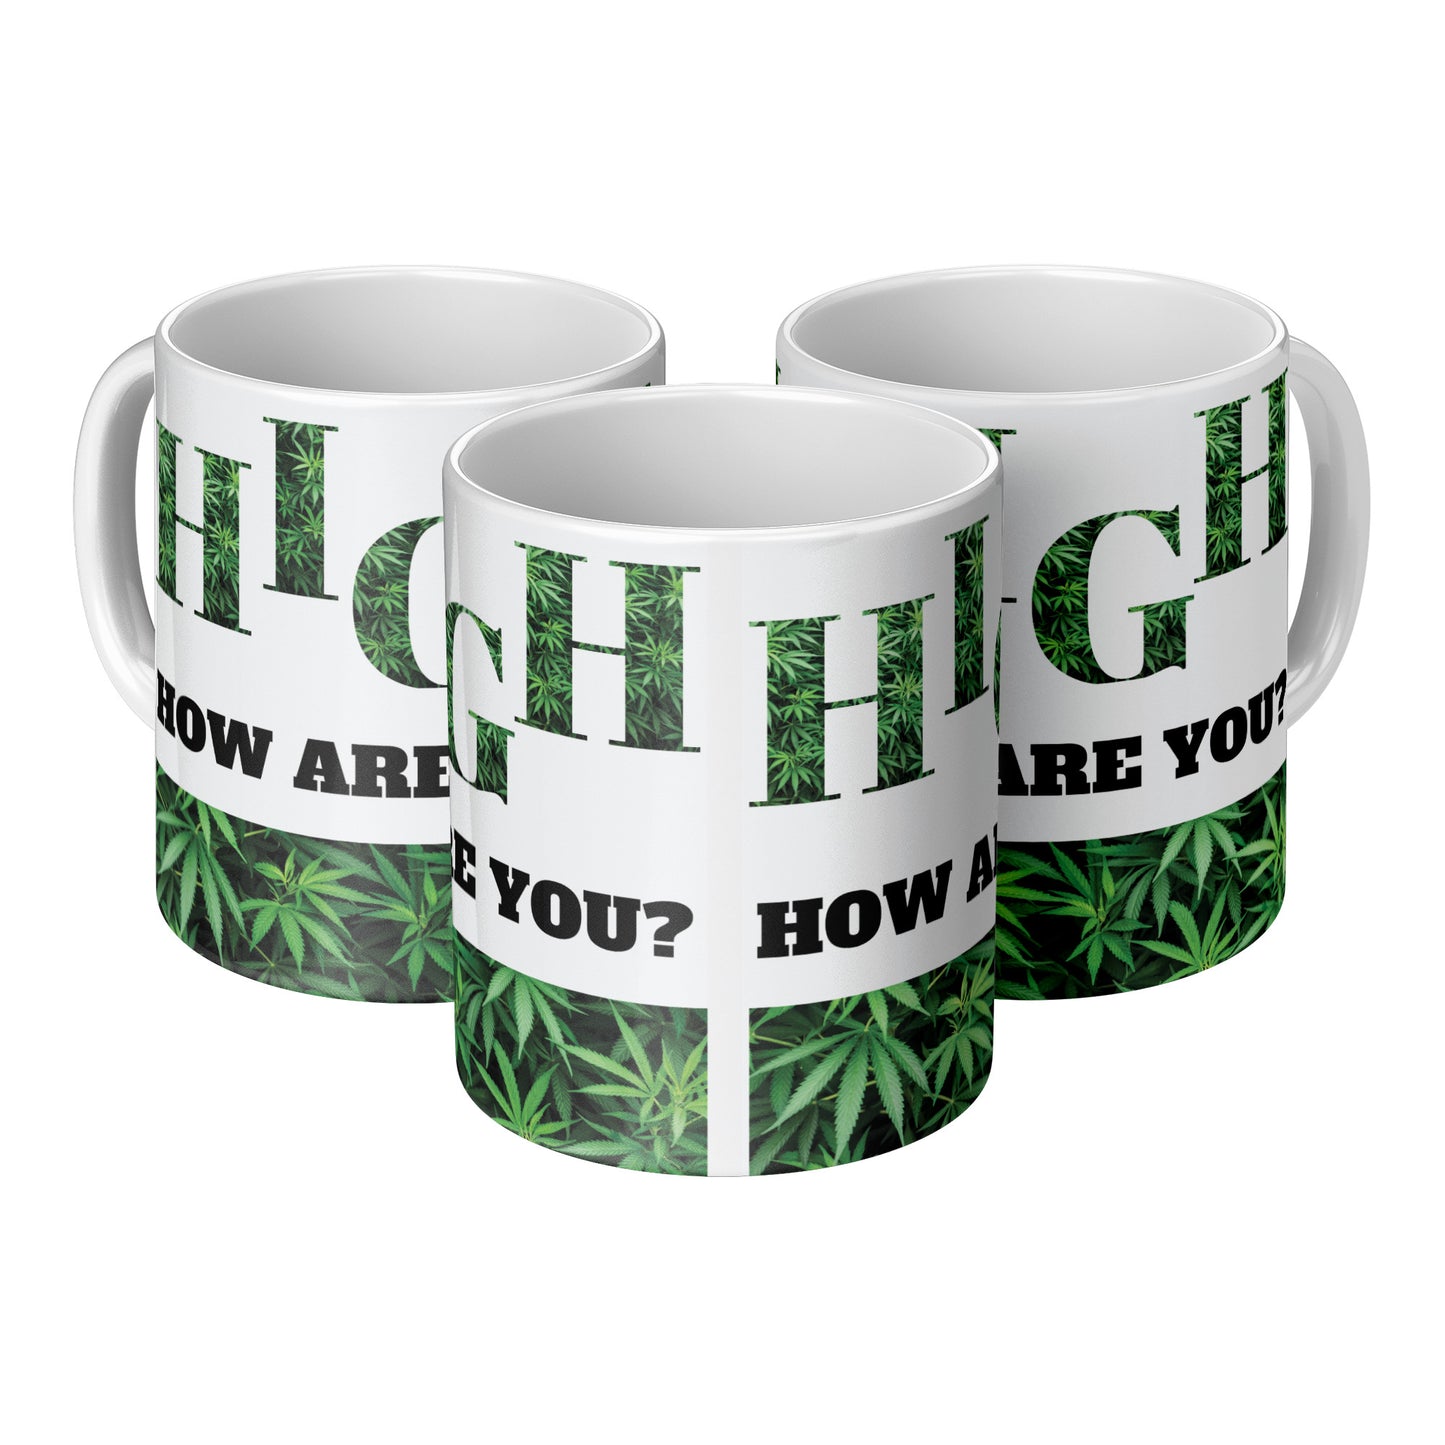 High How Are You Cannabis Inspired Mug